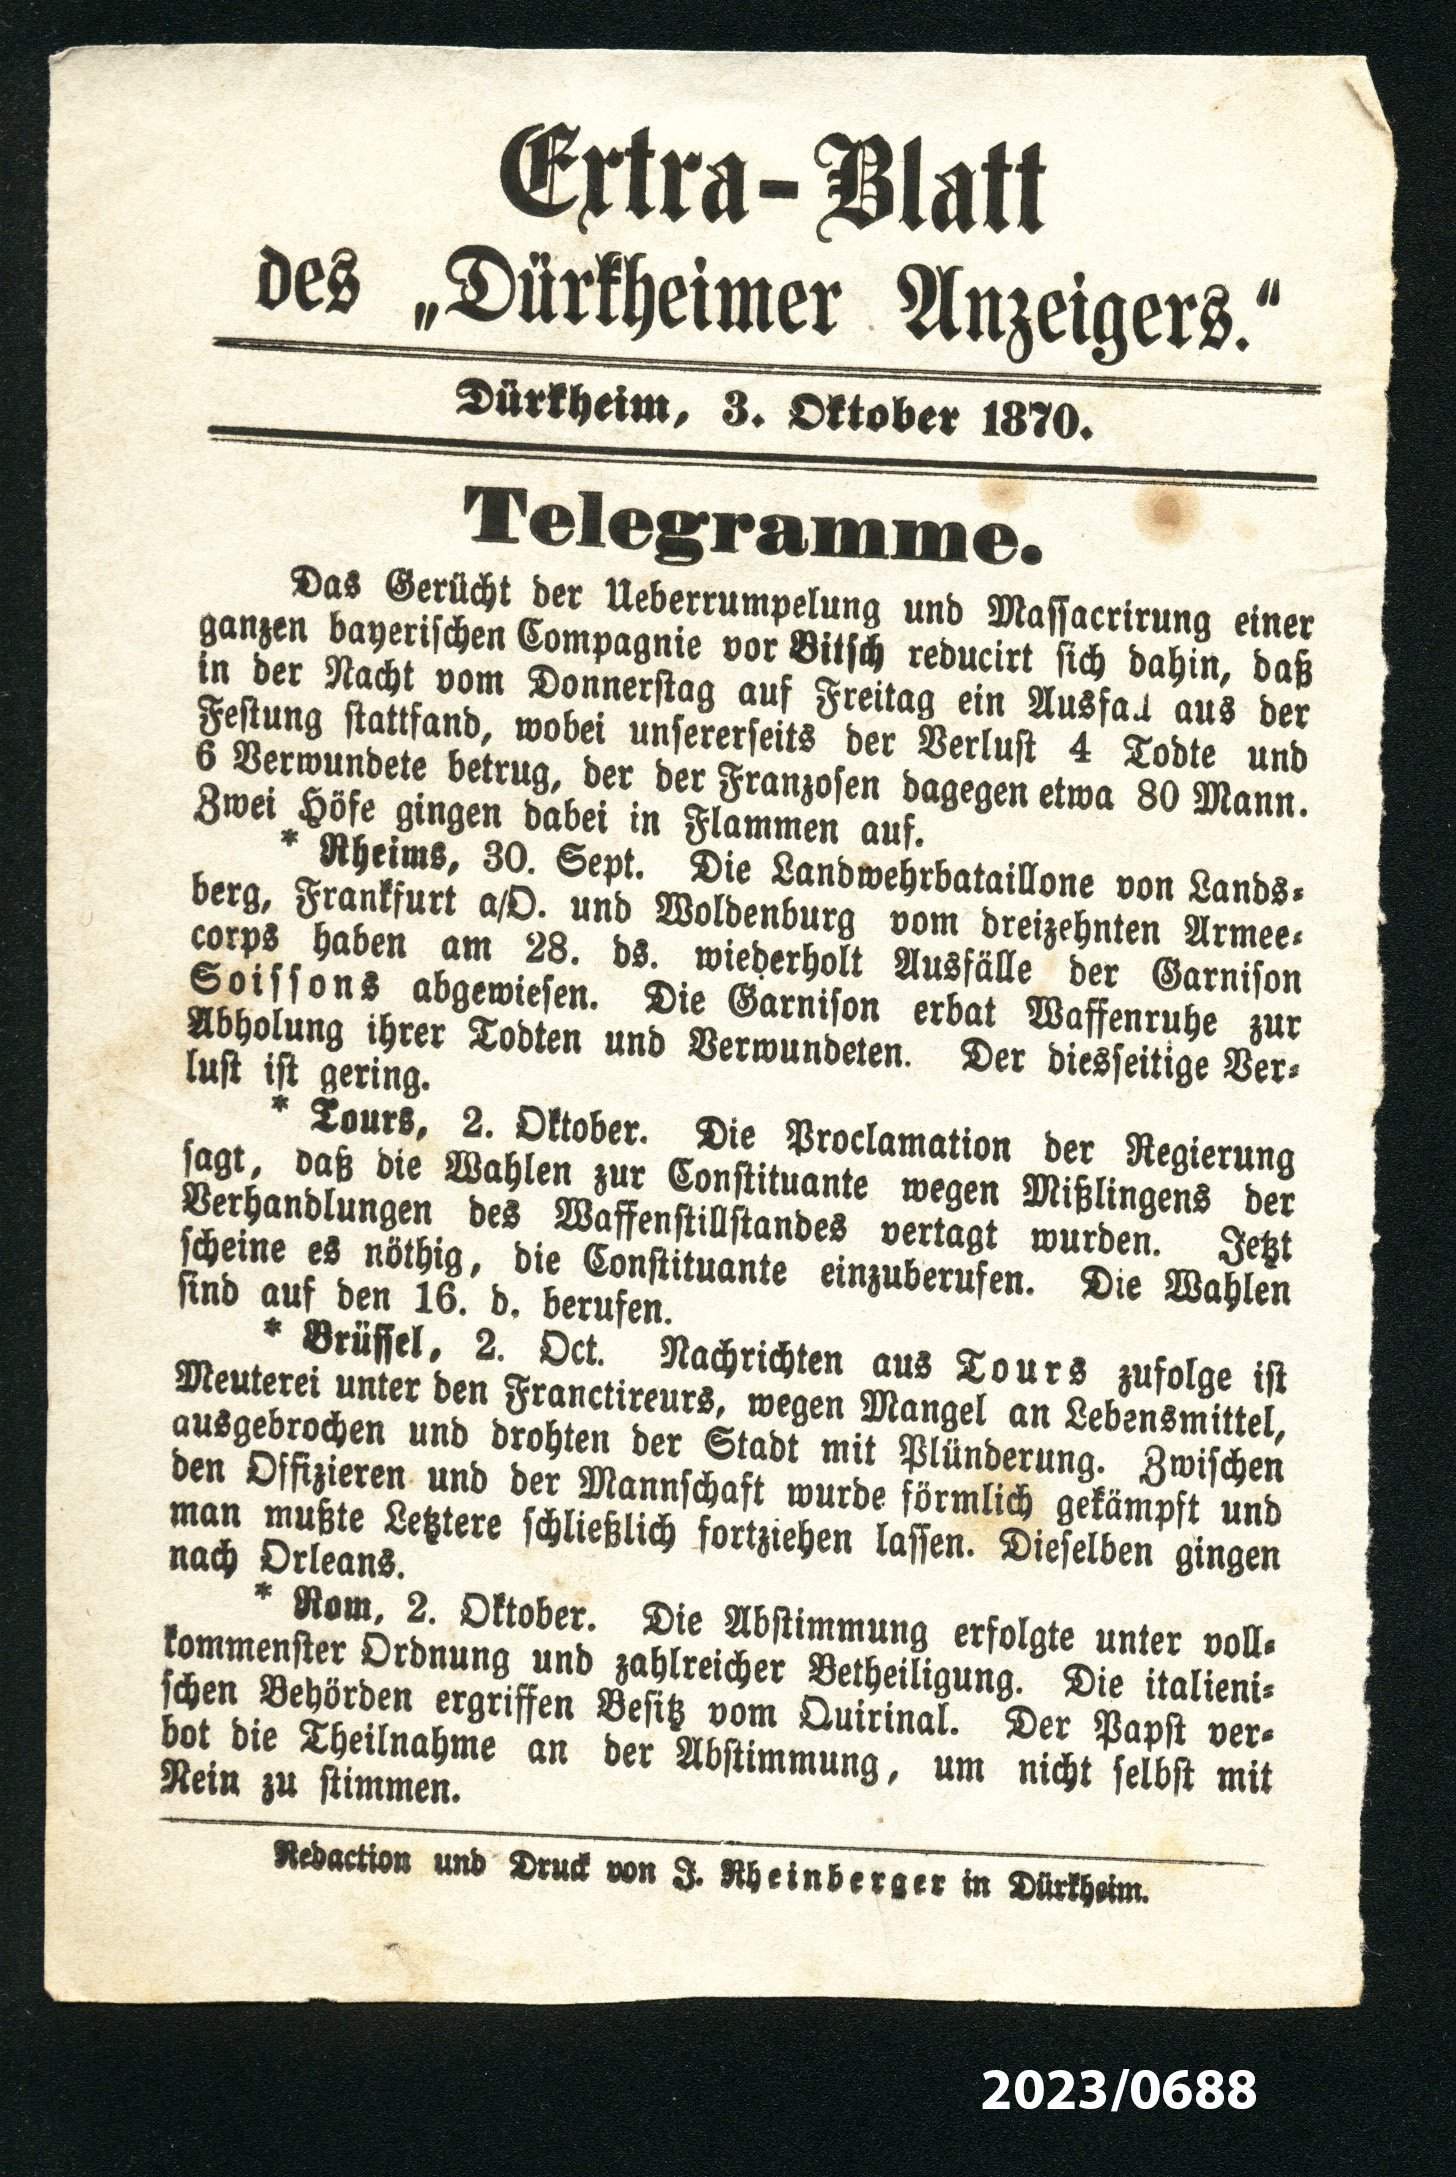 Extra-Blatt des "Dürkheimer Anzeigers." 3.10.1870 (Stadtmuseum Bad Dürkheim im Kulturzentrum Haus Catoir CC BY-NC-SA)